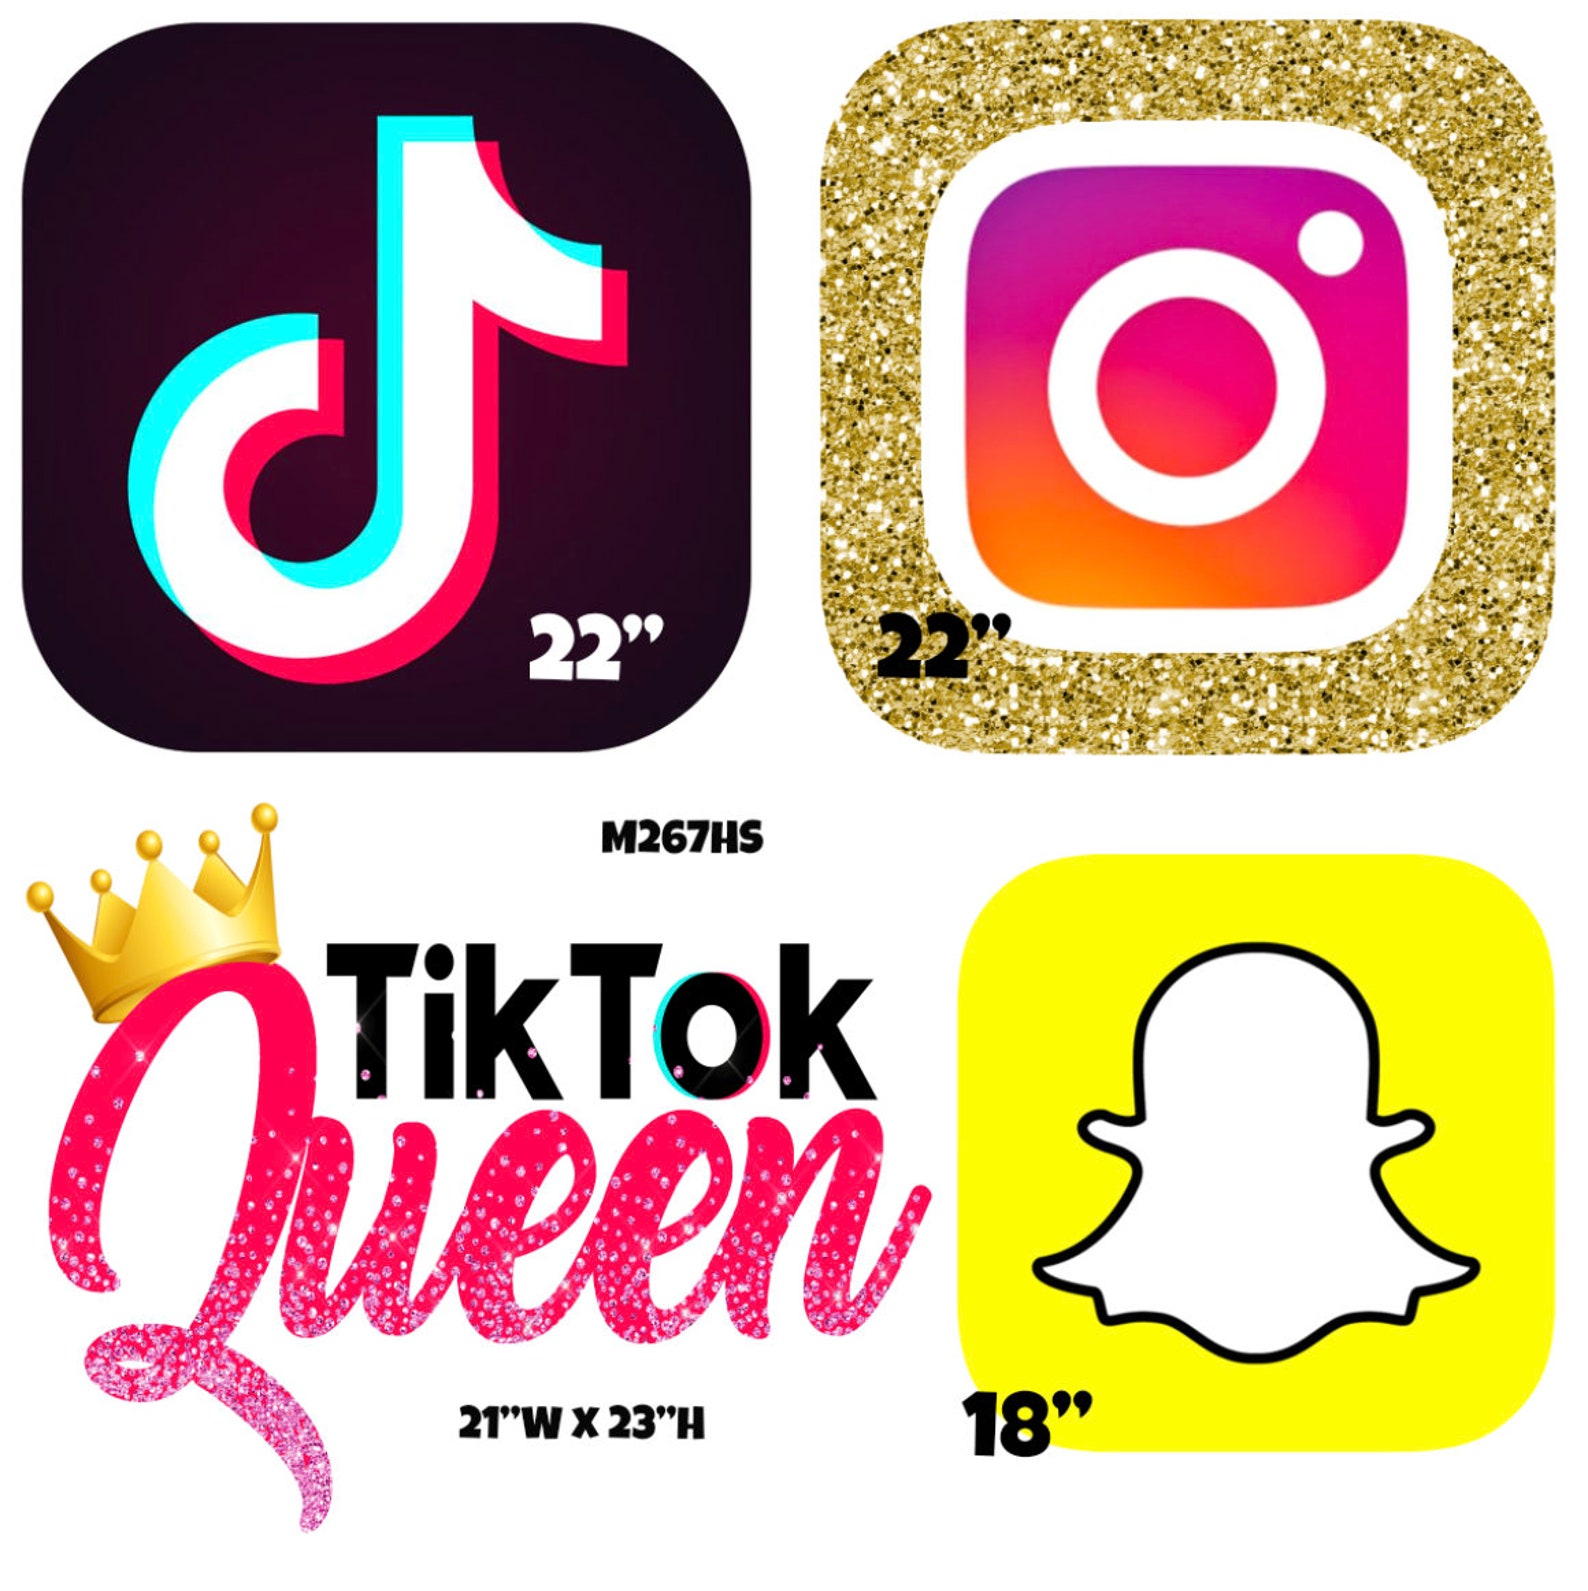 Tik Tok Snapchat Instagram Social Media M267HS - Etsy